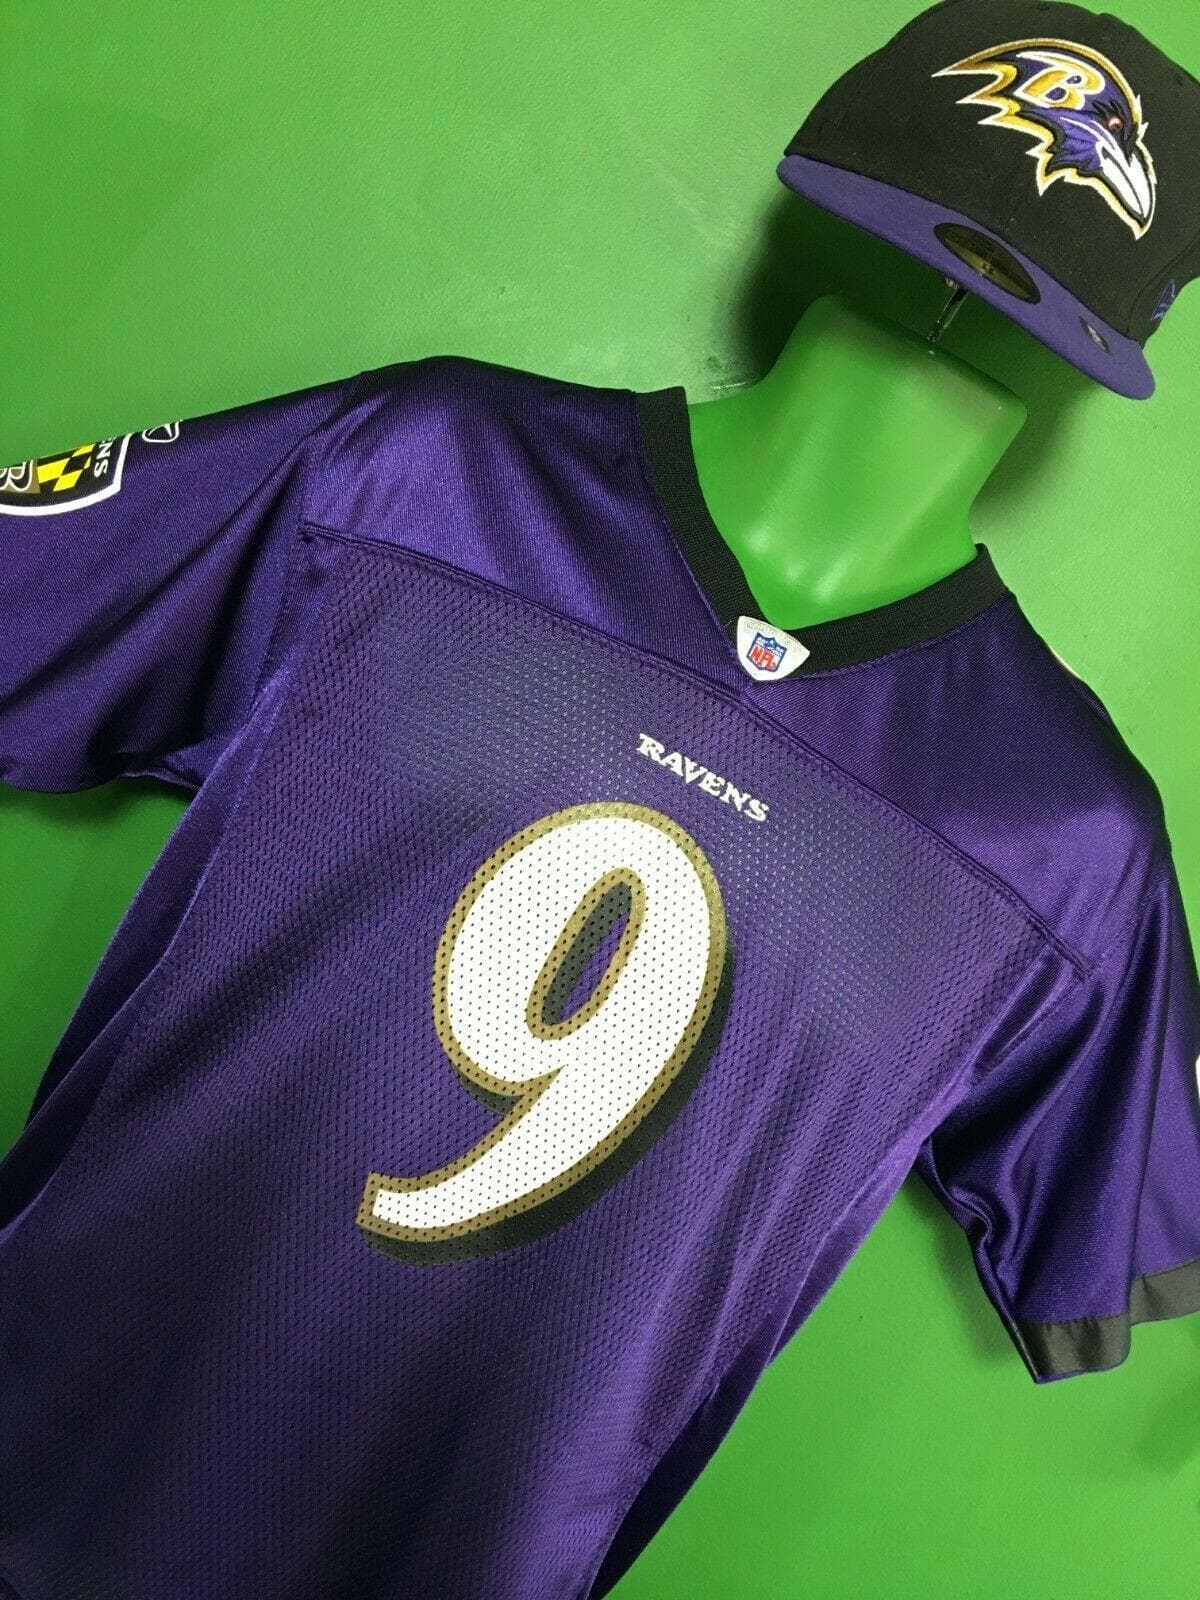 NFL Baltimore Ravens Steve McNair #9 Jersey Youth Large 14-16